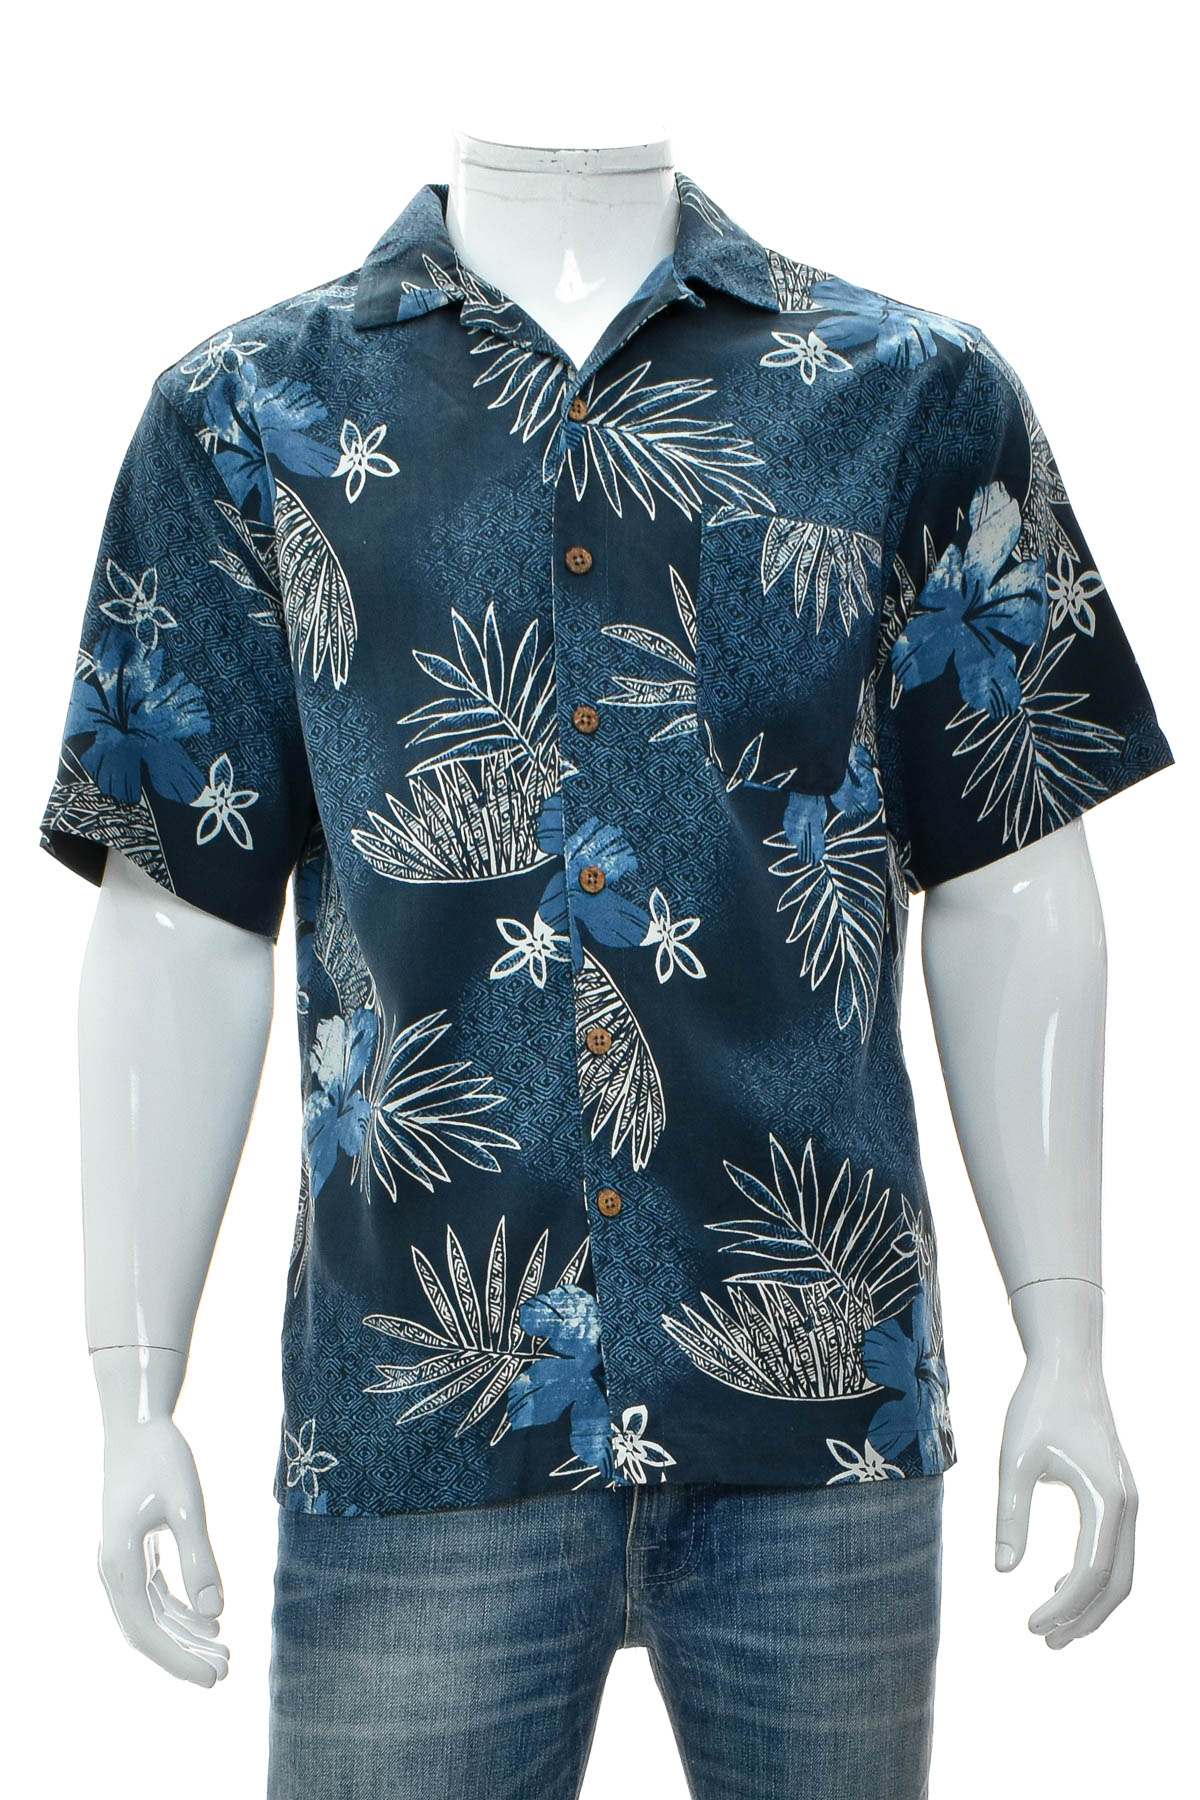 Men's shirt - Island Shores - 0